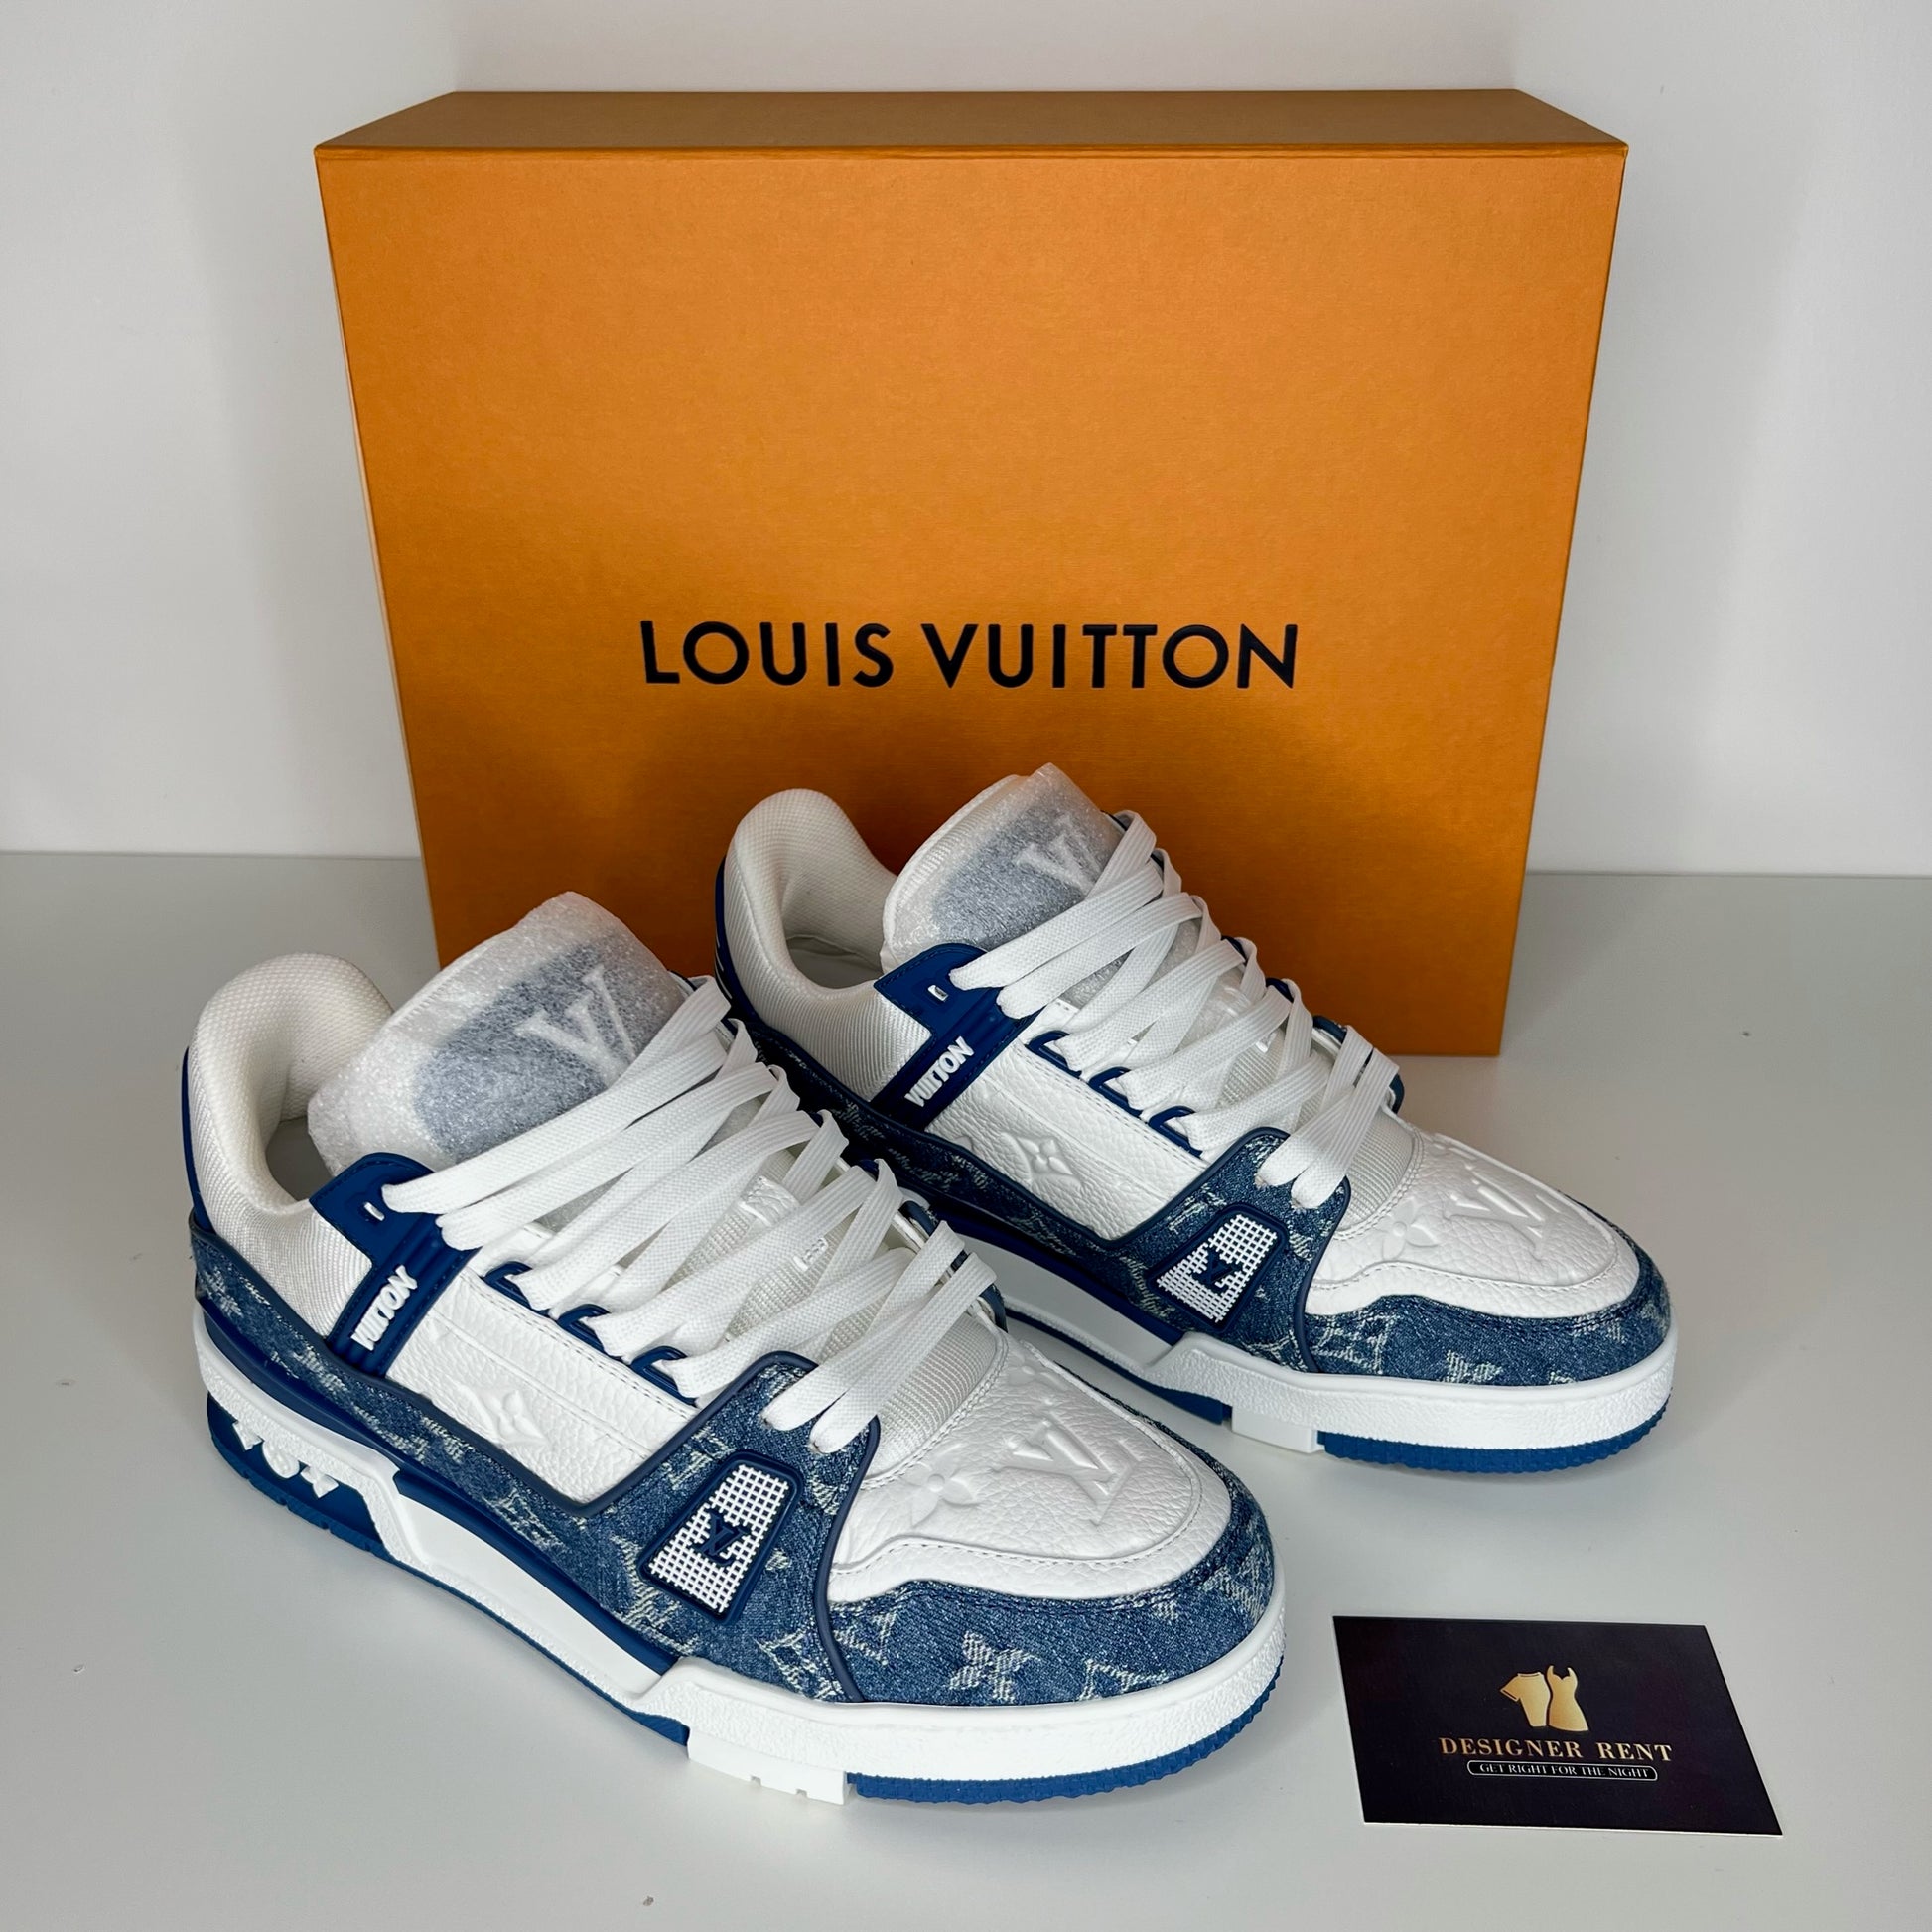 Louis-vuitton jean sneakers